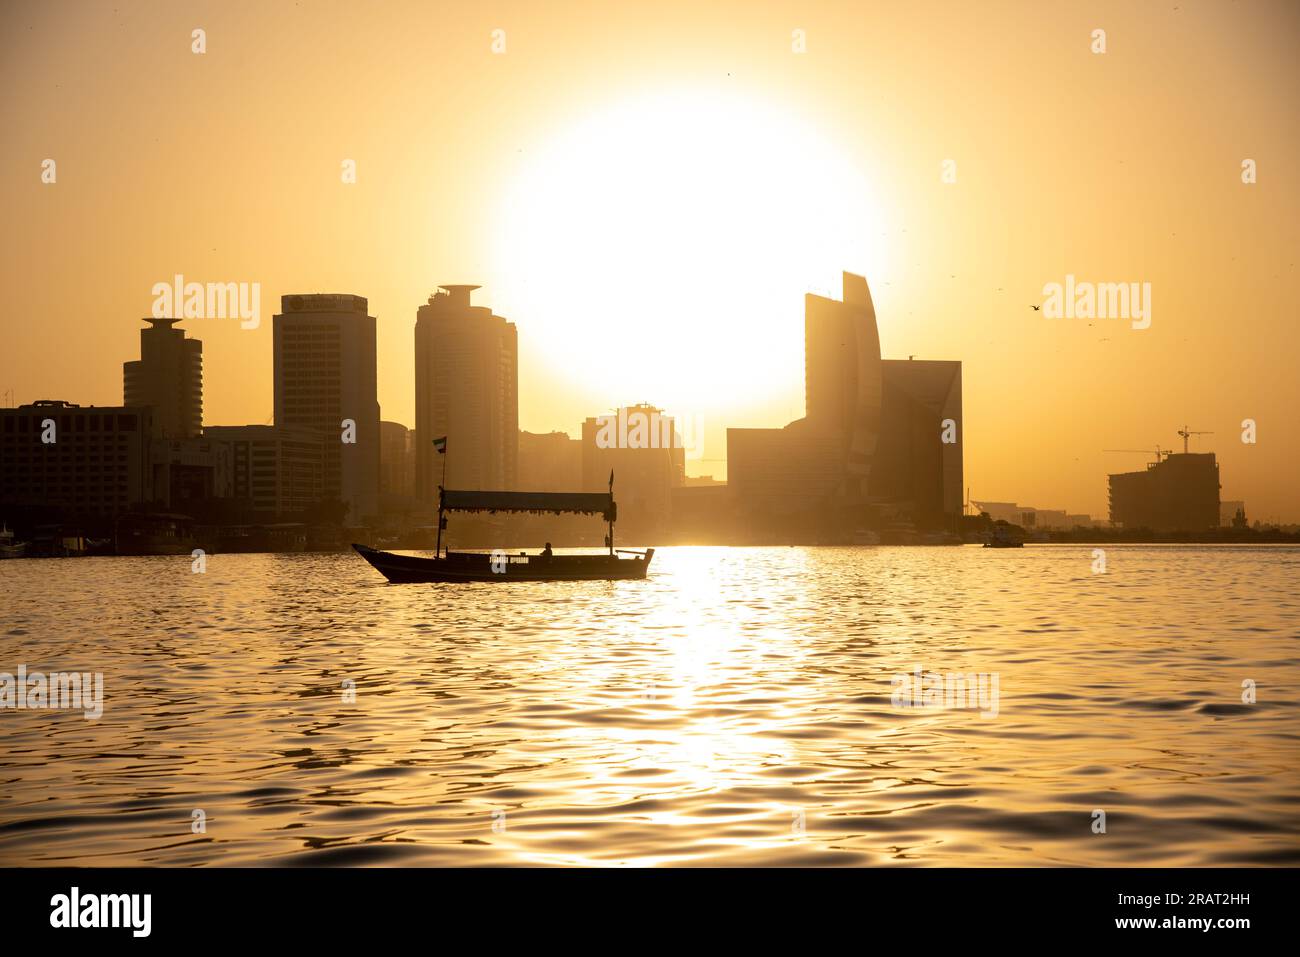 View of a sailboat during sunset at Dubai creek Stock Photo